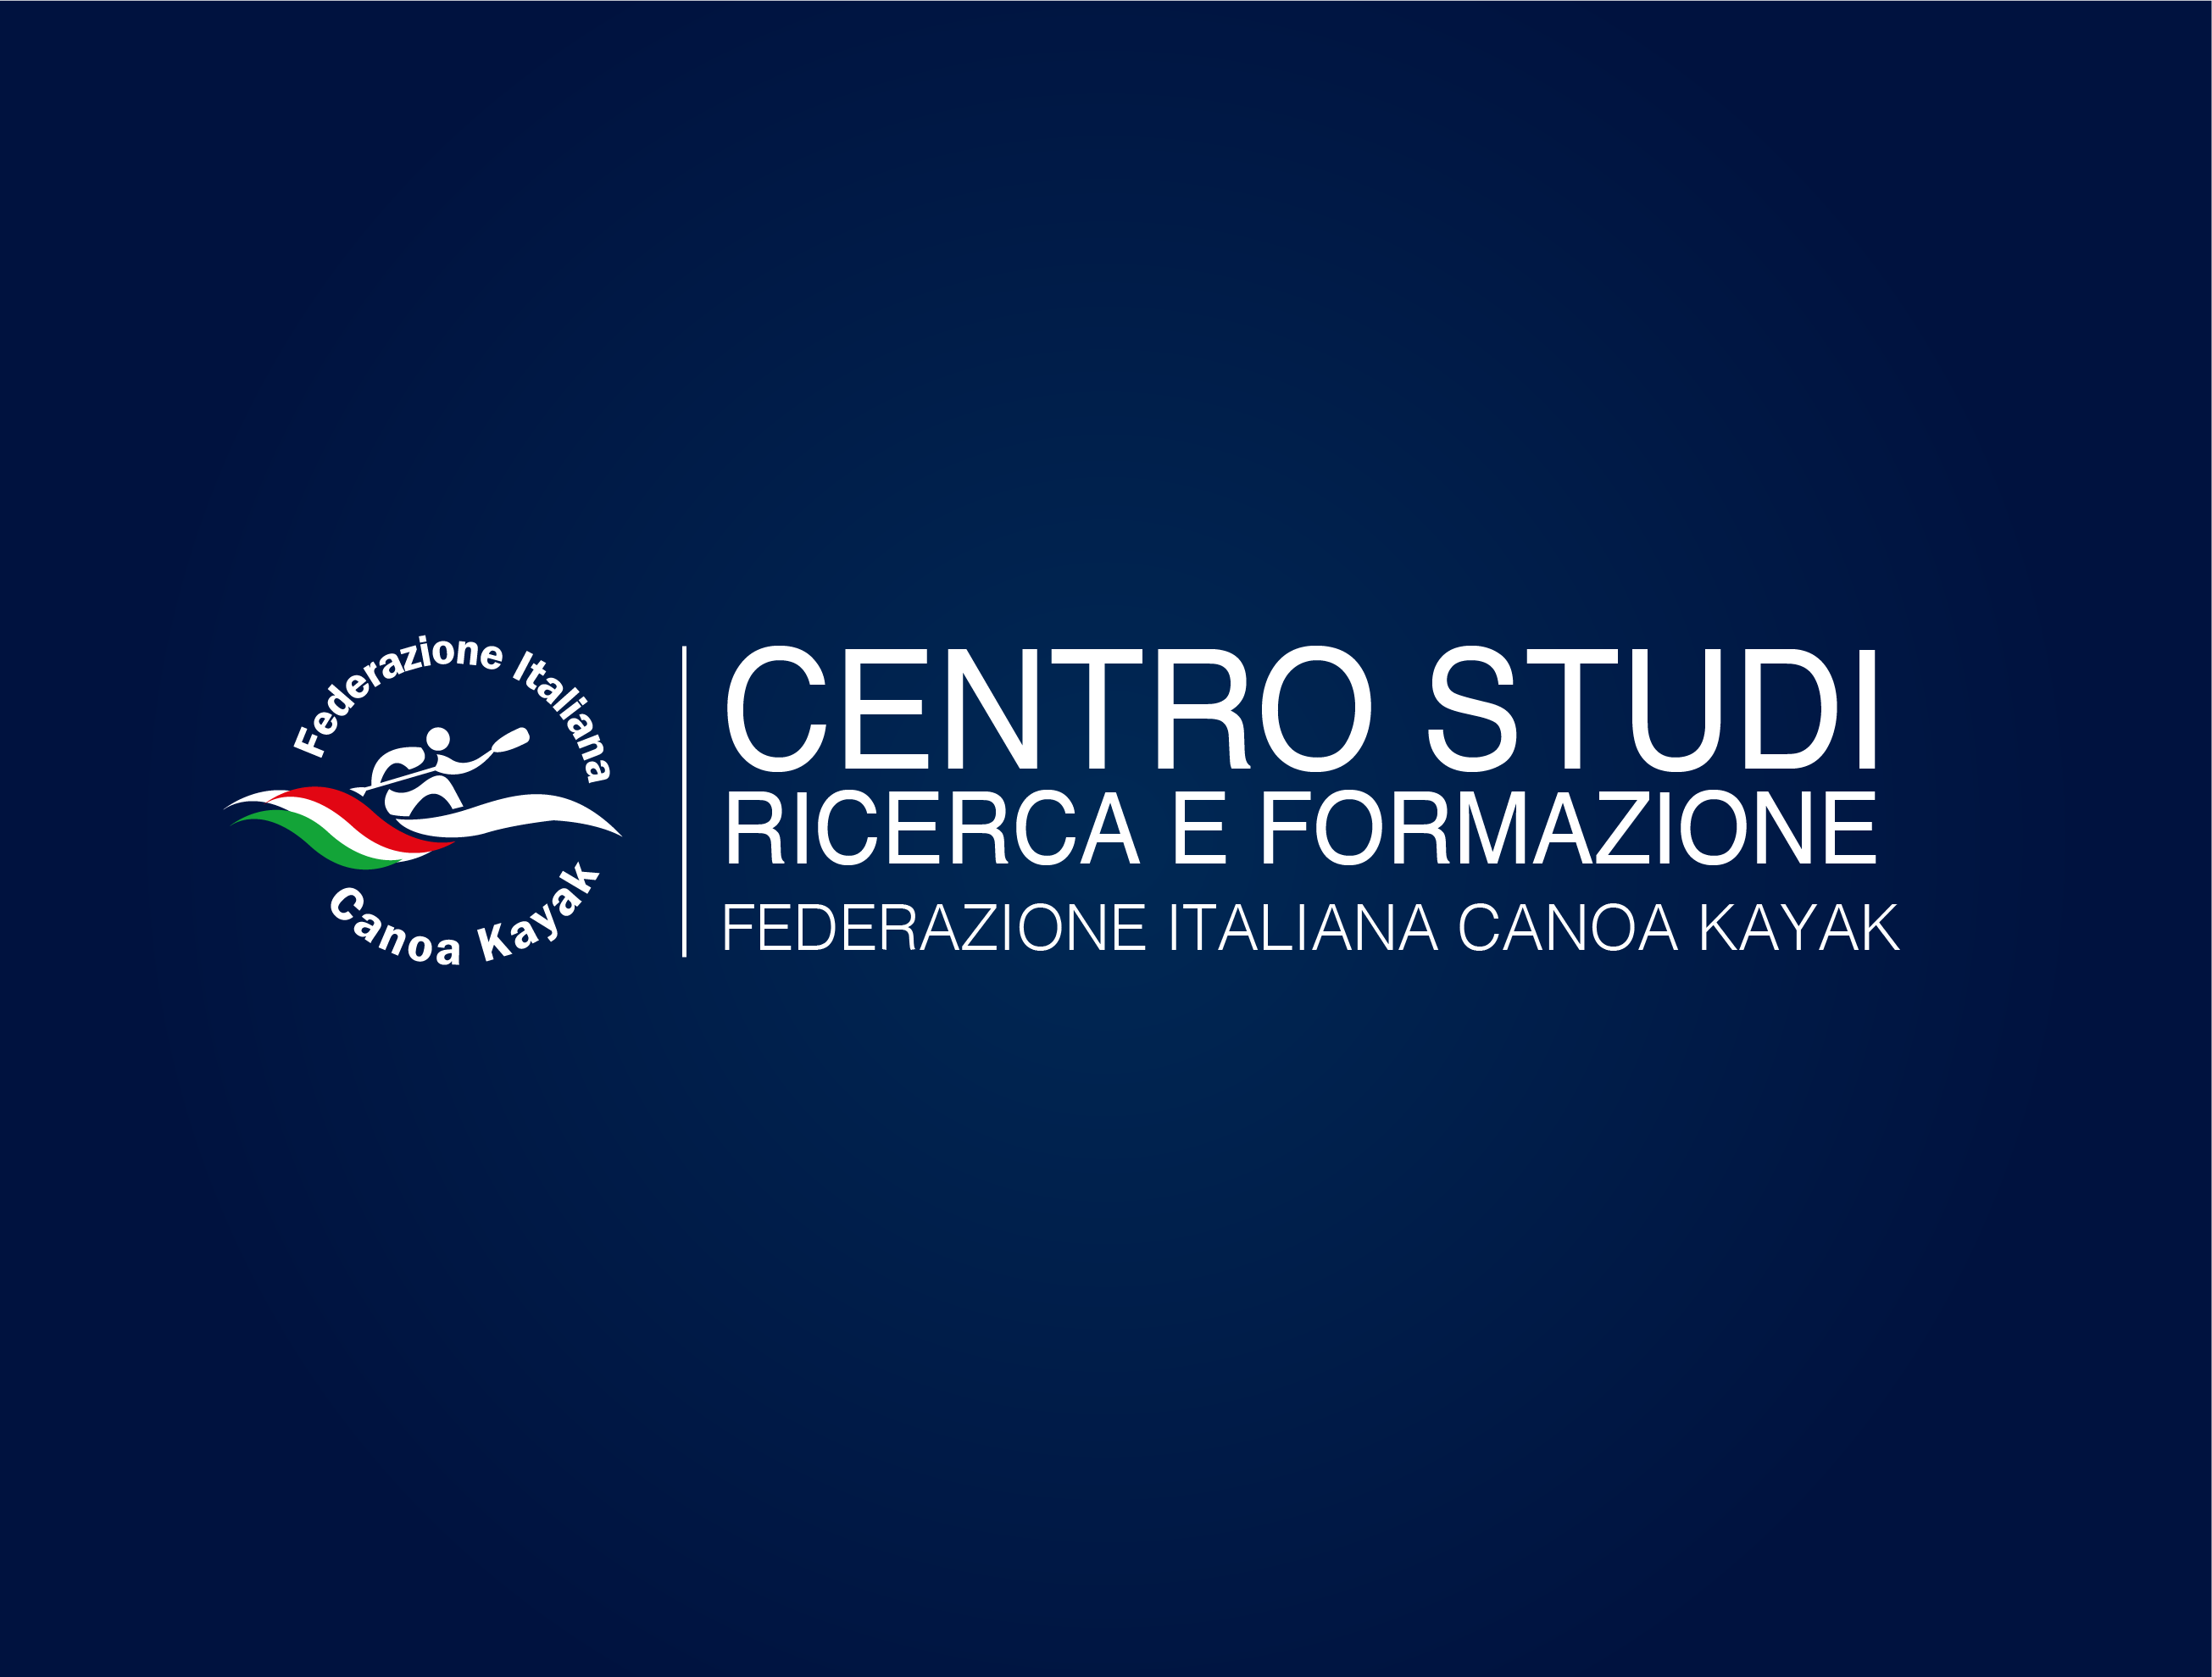 images/Centro_Studi_Logo-01.png